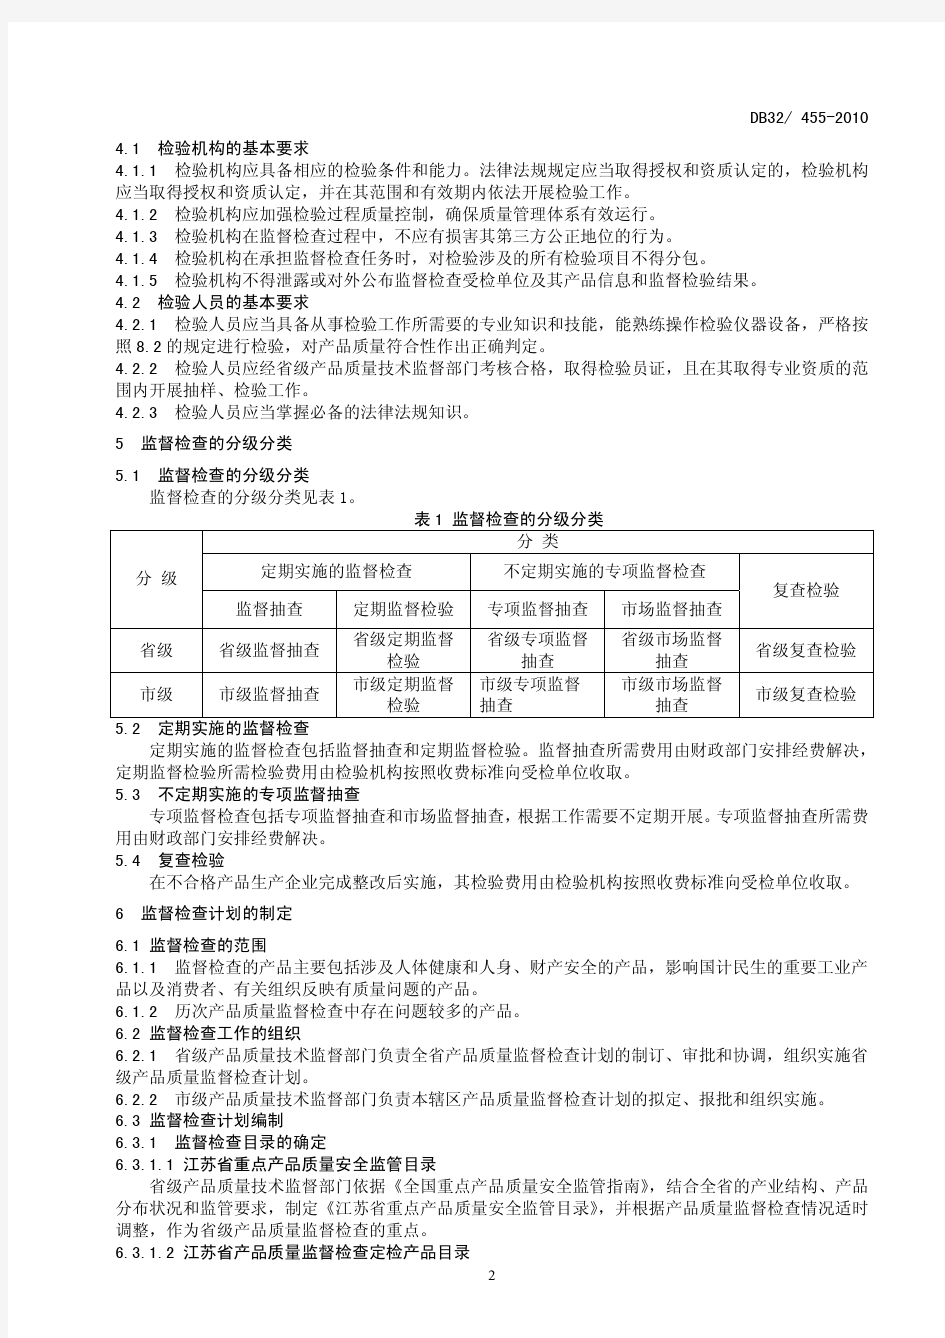 DB32 455-2010 江苏省产品质量监督检查工作规范